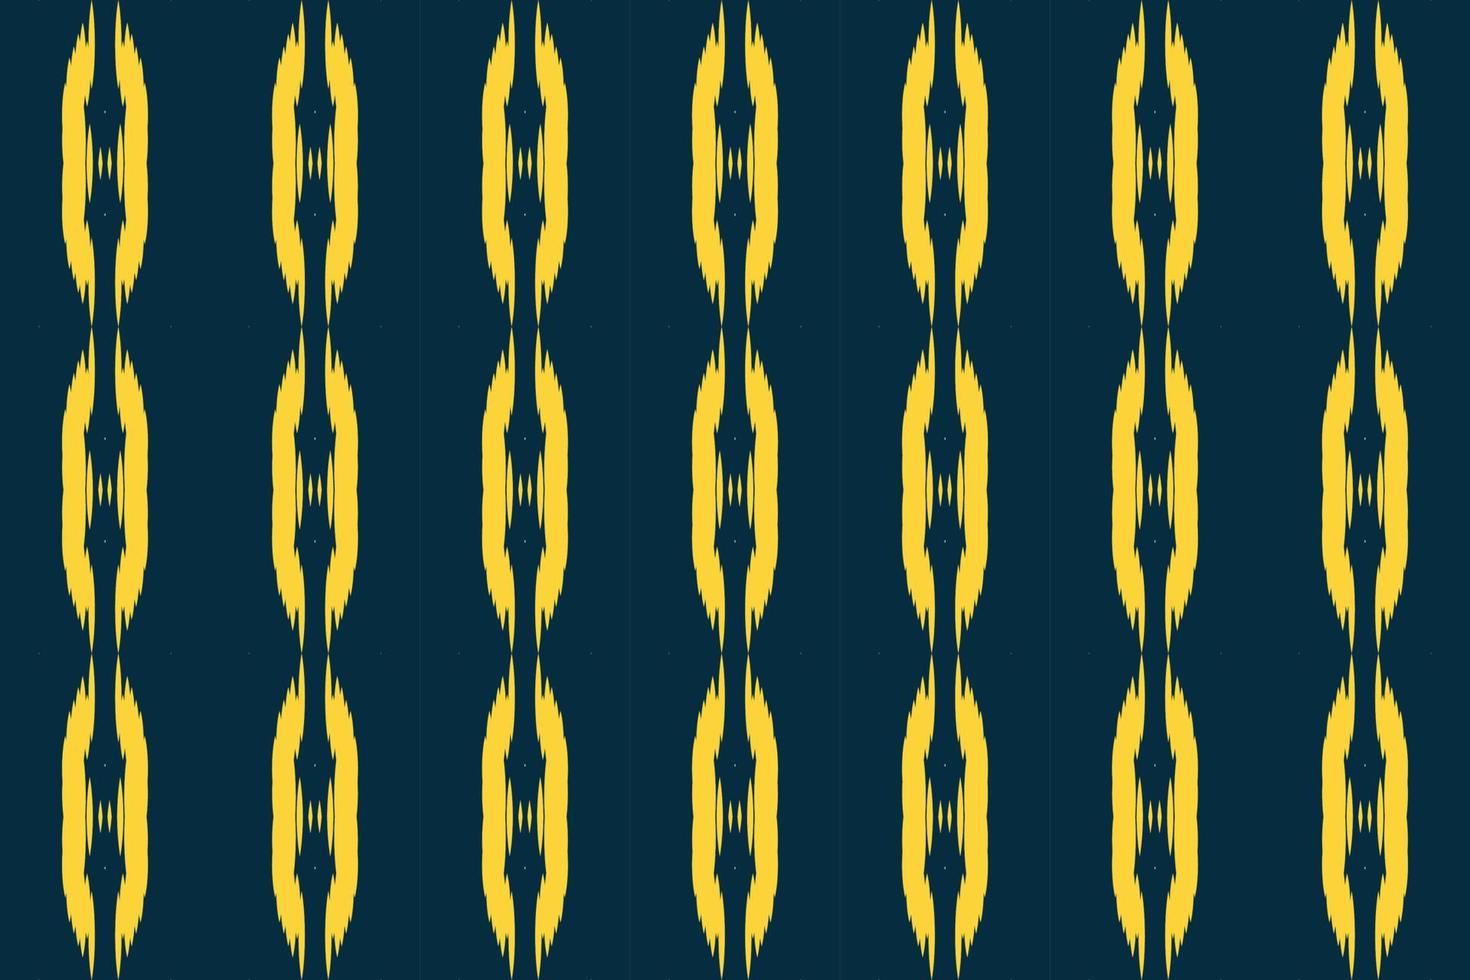 Motif ikat designs tribal africa borneo escandinavo batik bohemian texture design de vetor digital para impressão saree kurti tecido pincel símbolos amostras